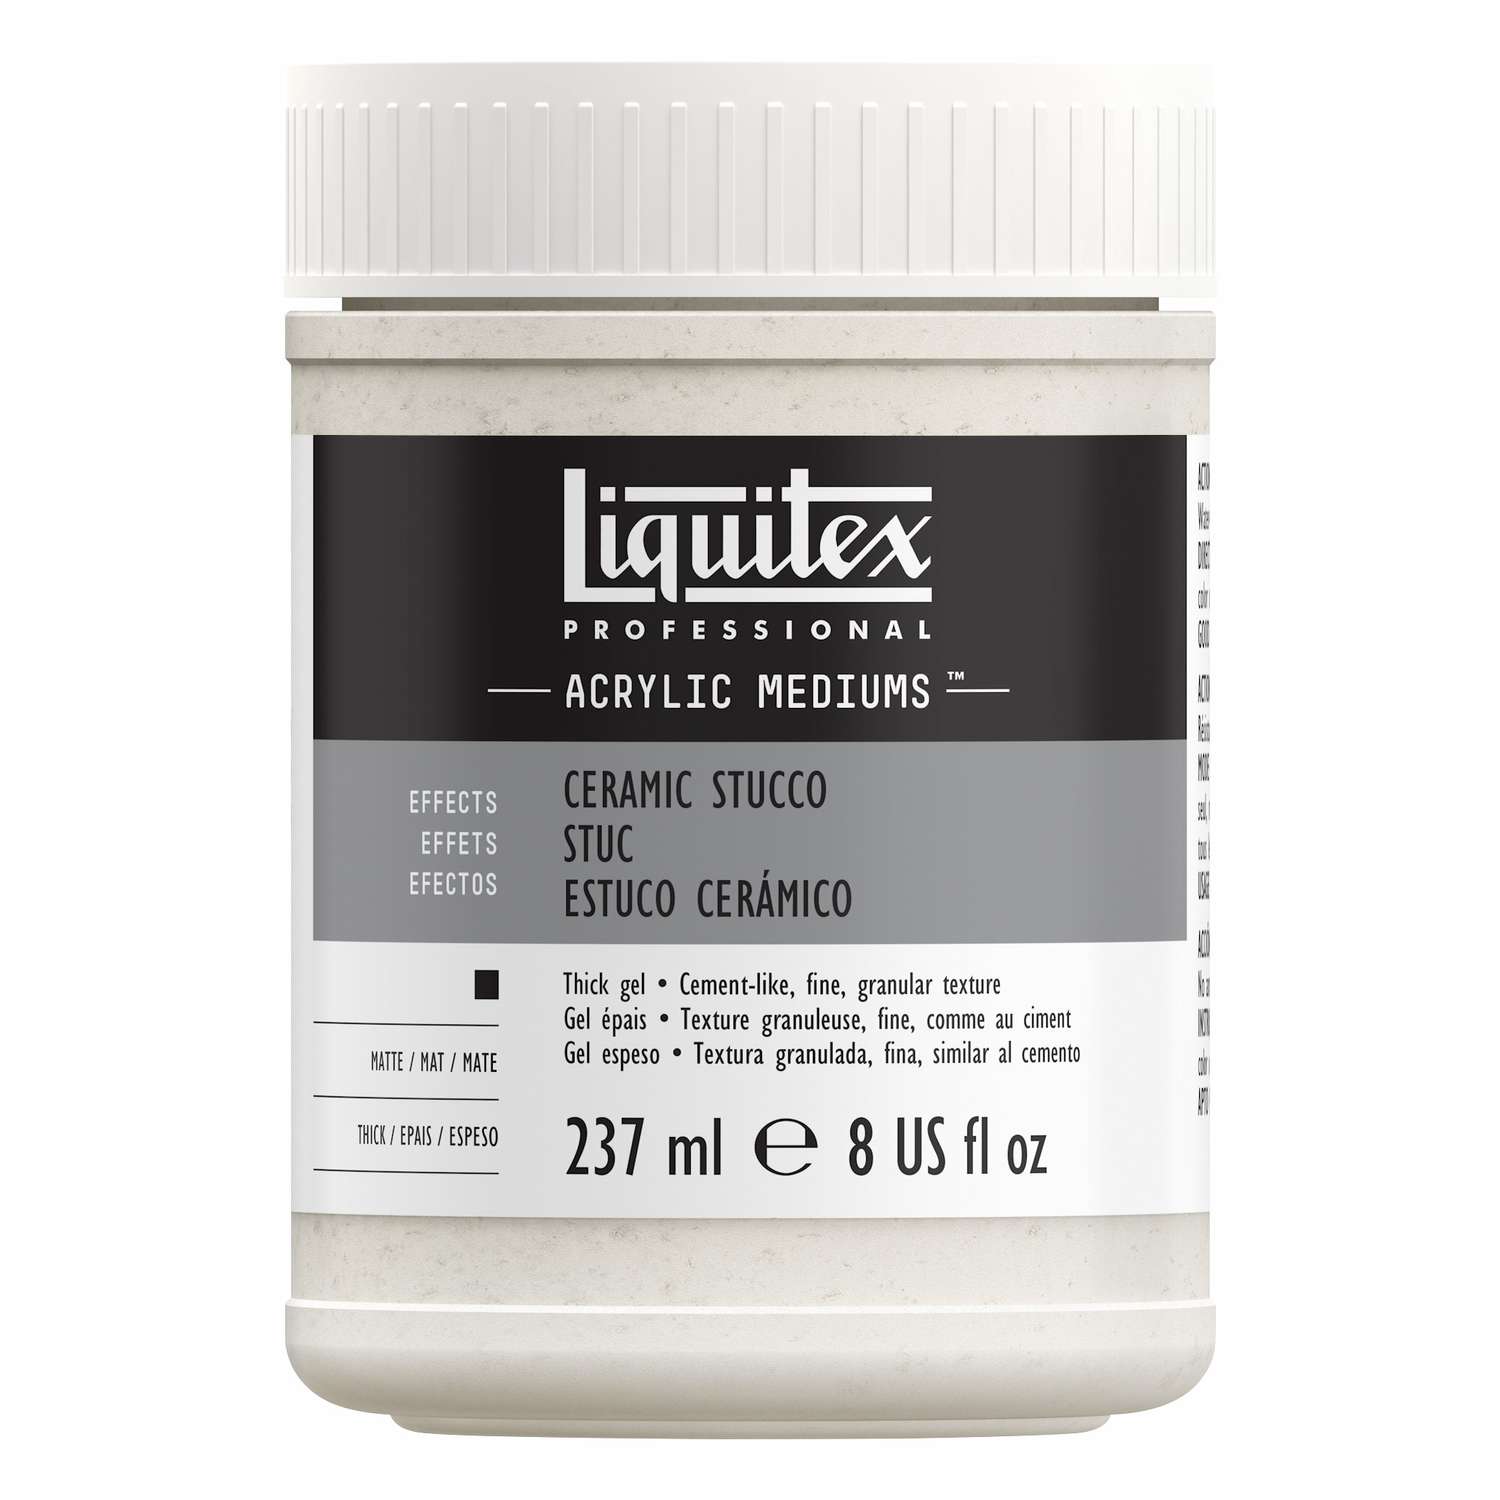 Gel ceramica stucco - Liquitex - 237 ml